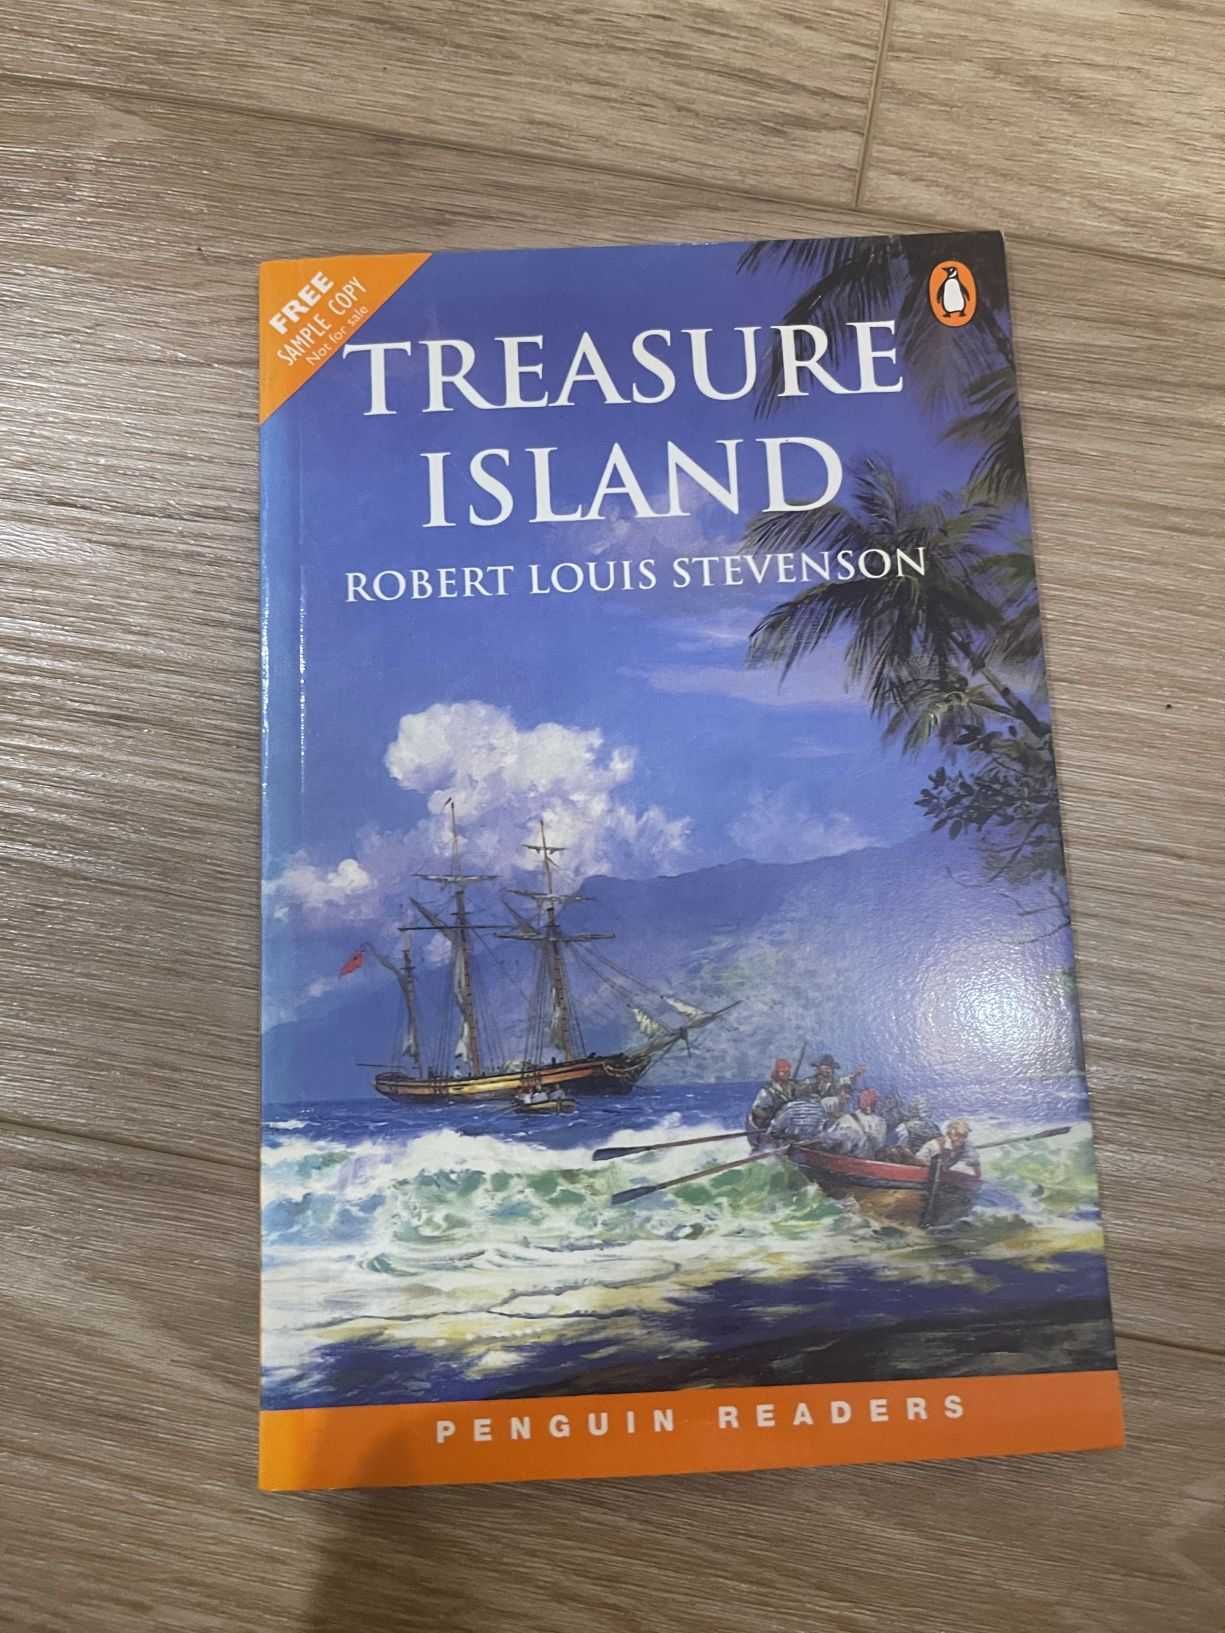 Treasure Island
Robert Louis Stevenson